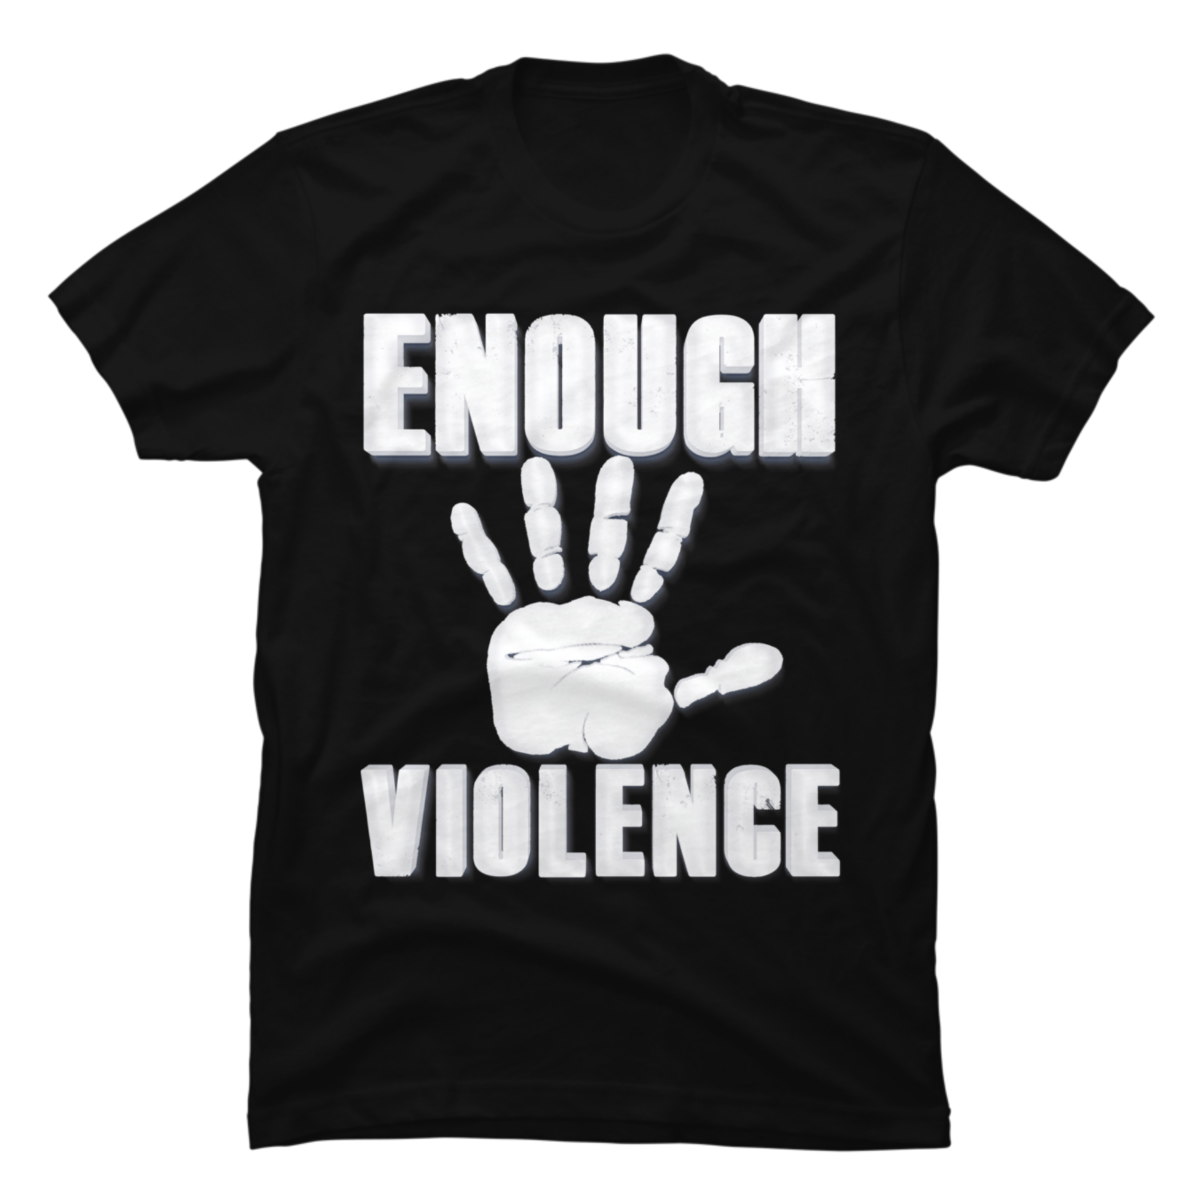 gun violence shirt